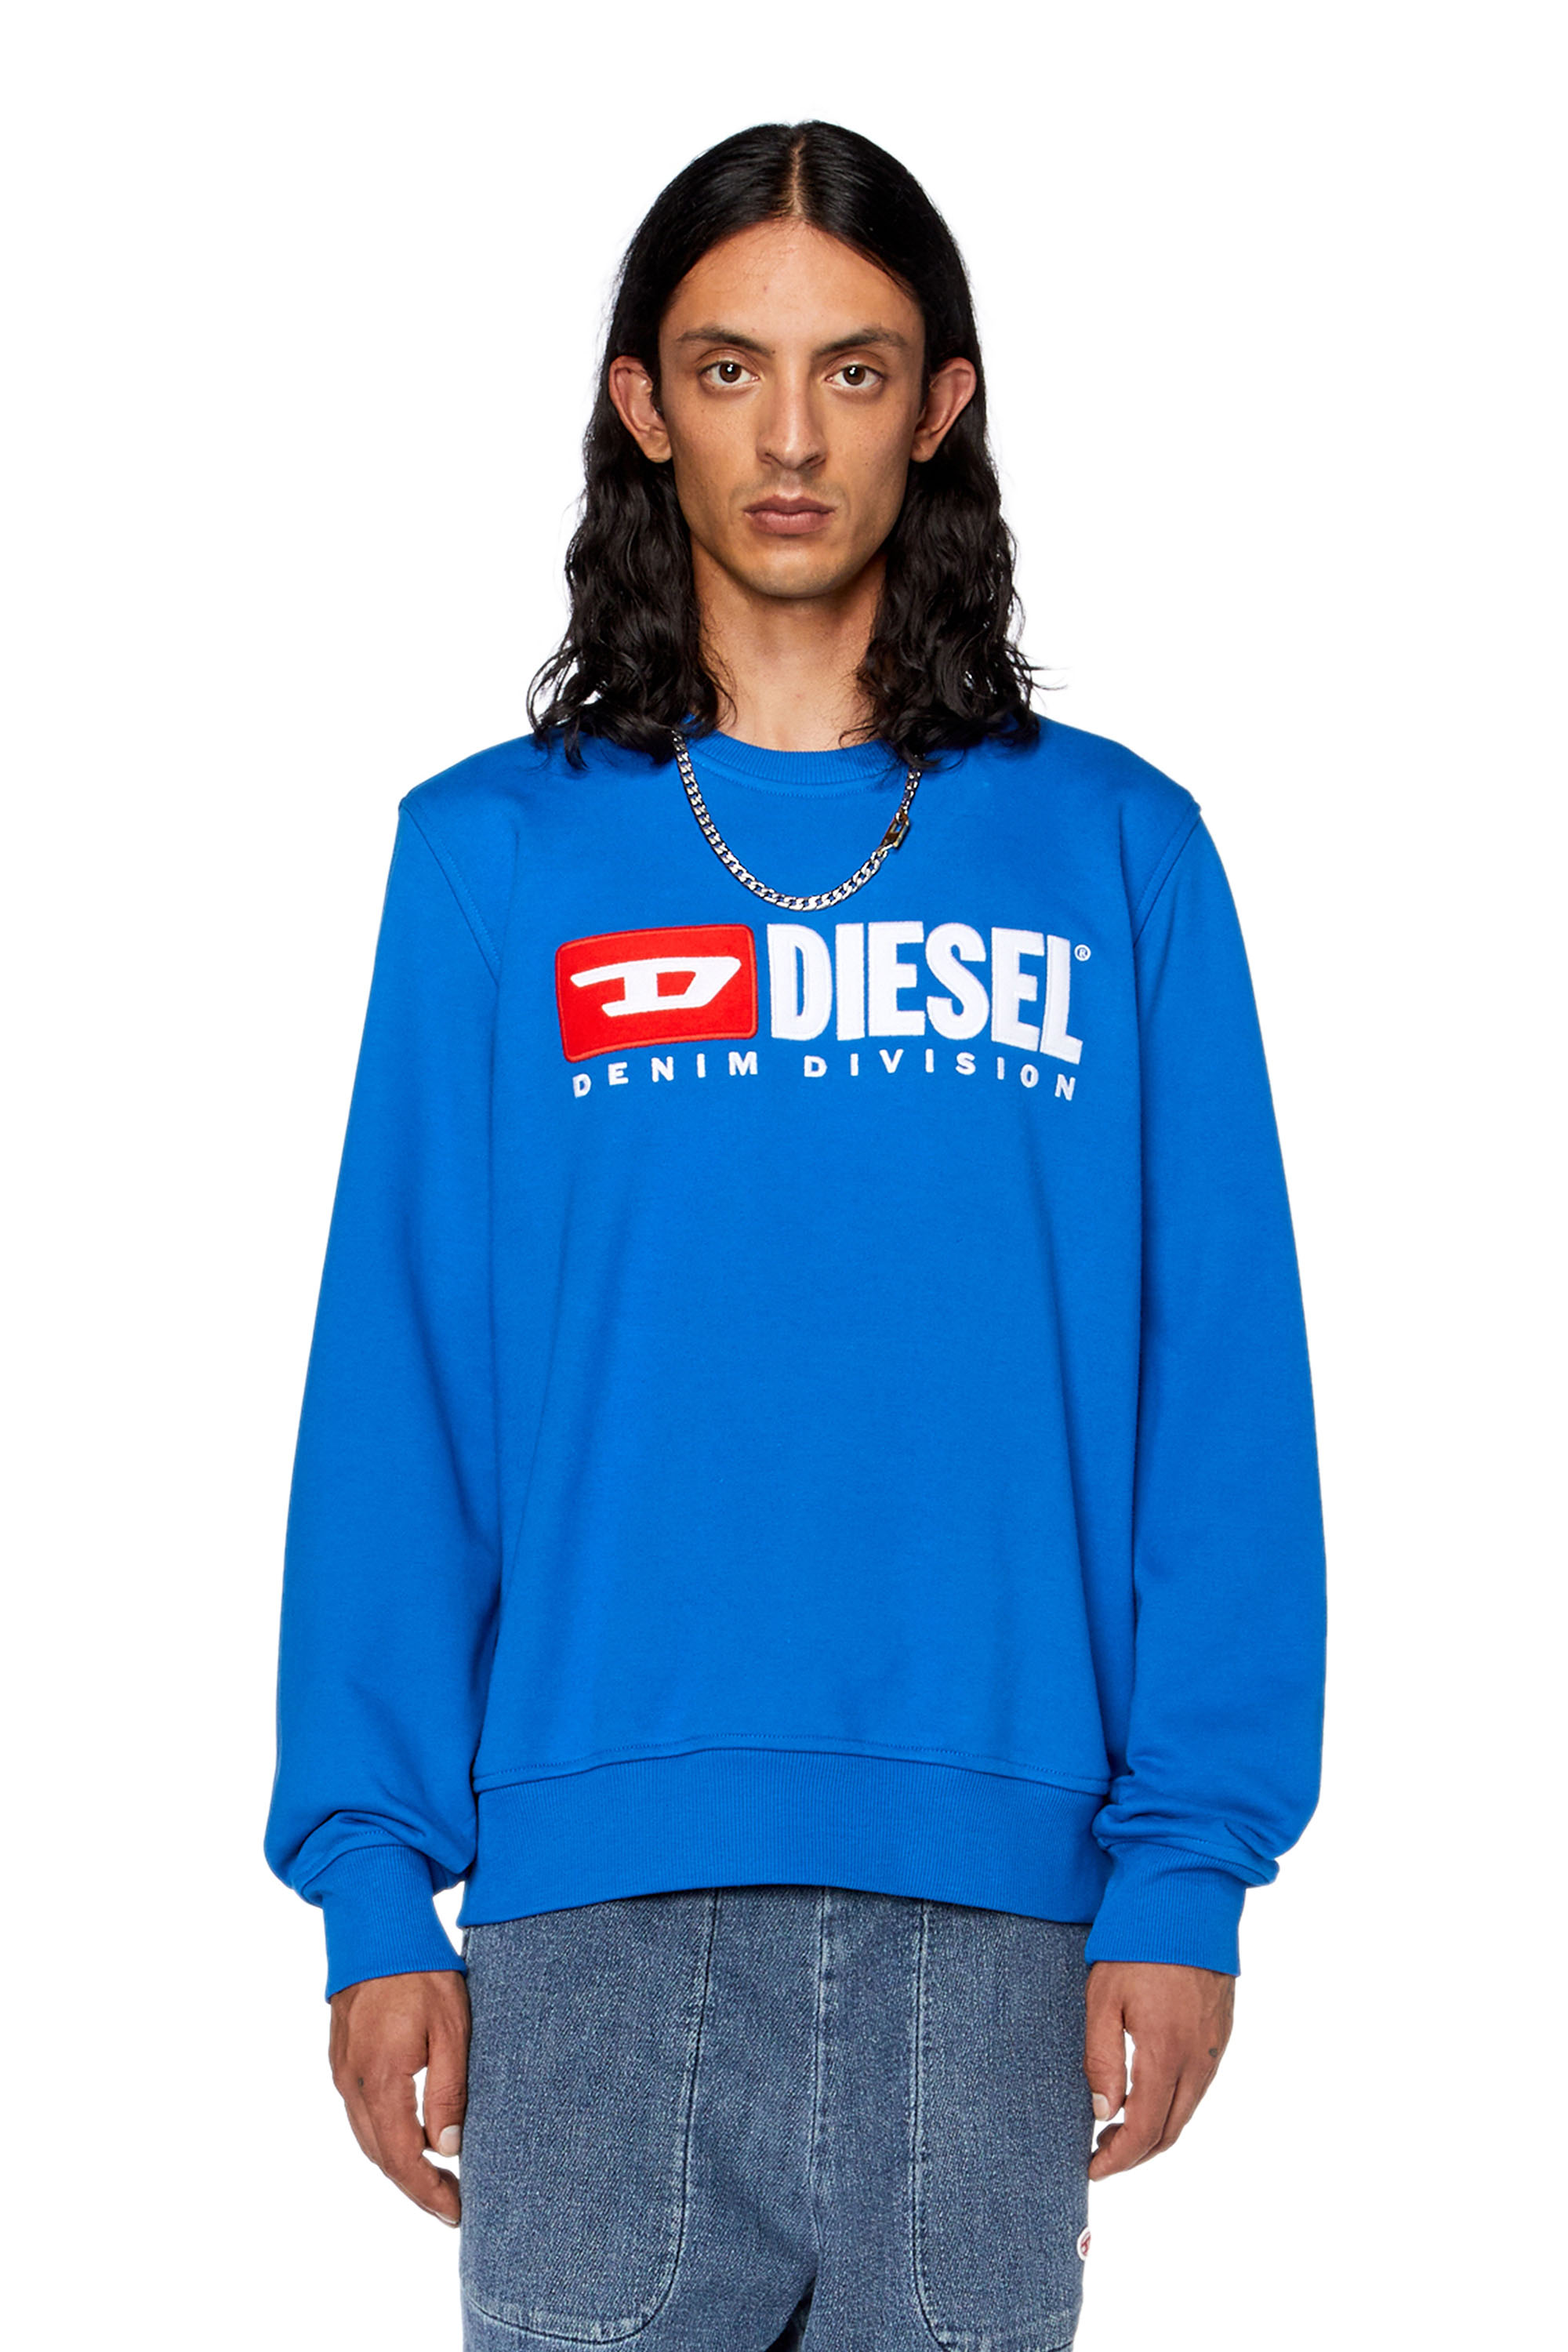 Diesel - S-GINN-DIV, Blue - Image 3